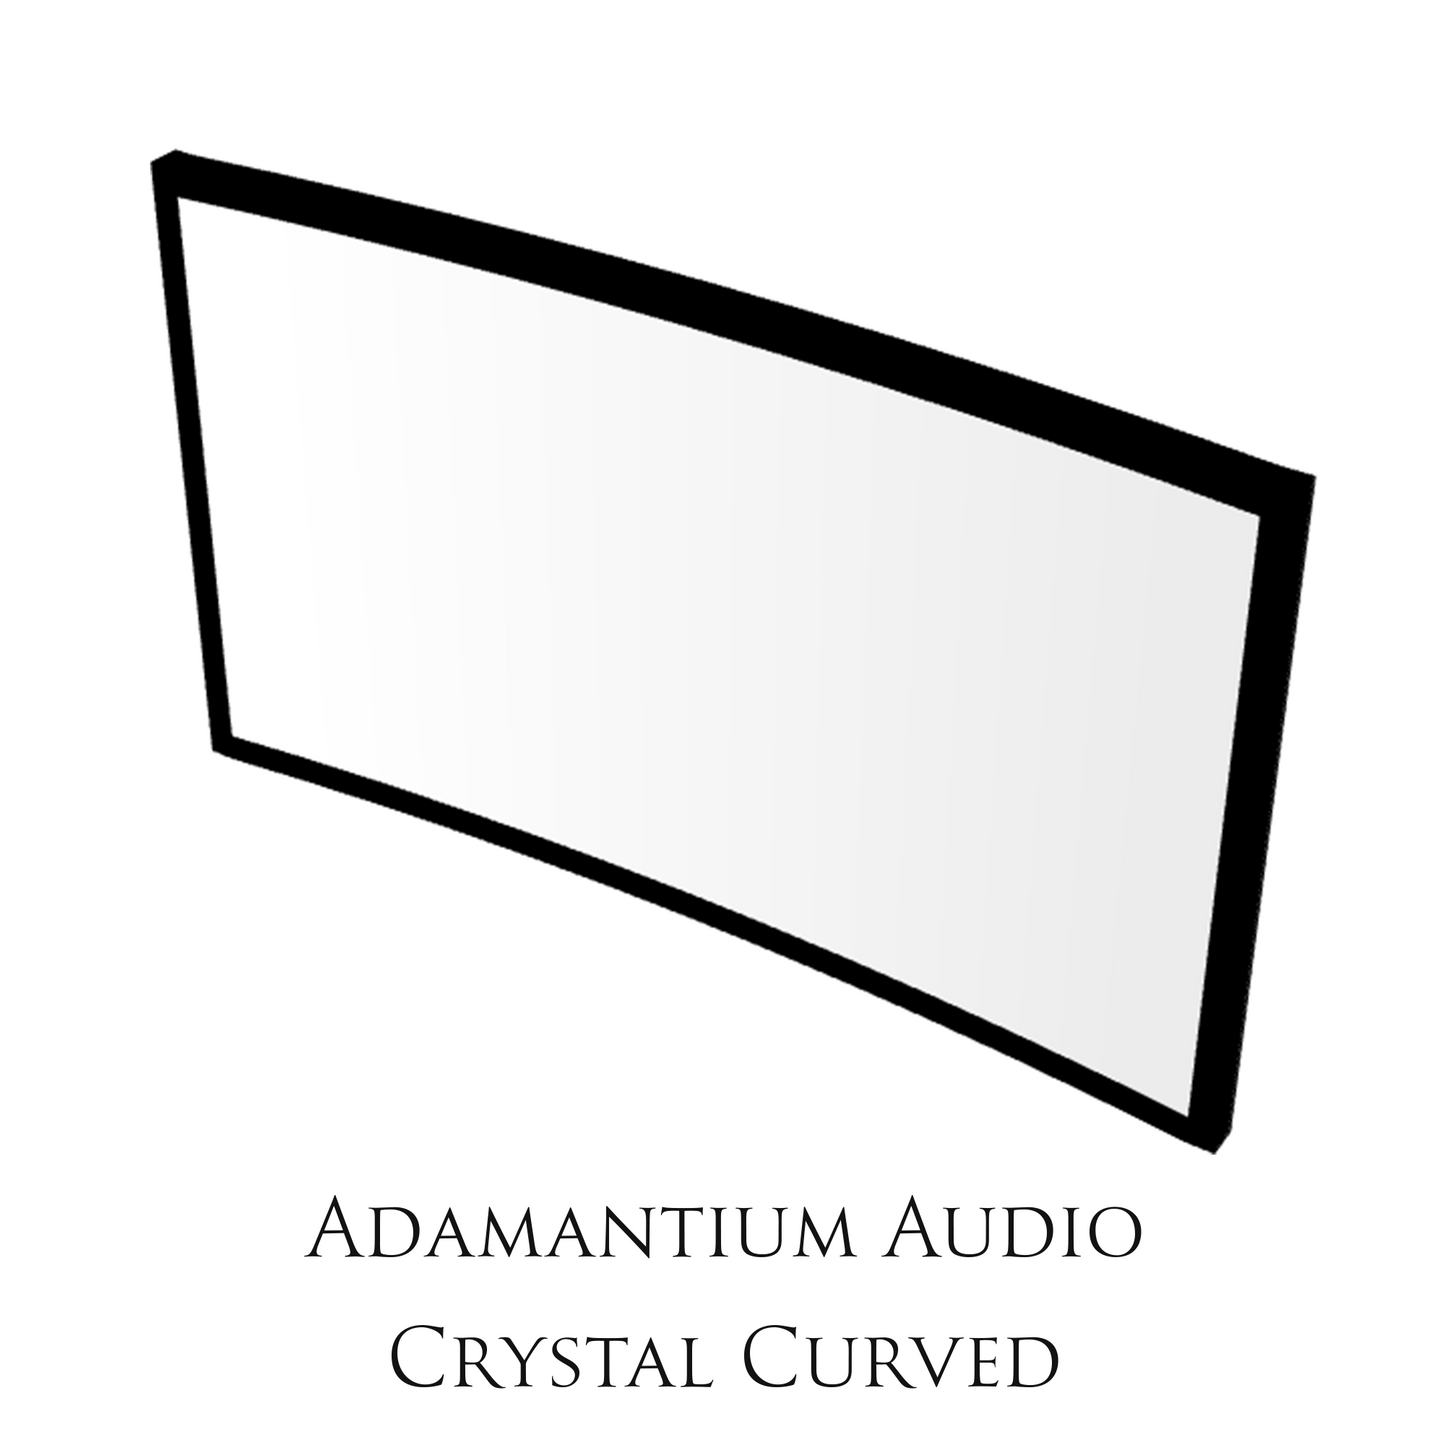 
                  
                    Adamantium Audio Frame Screen Crystal Curved 16:9
                  
                